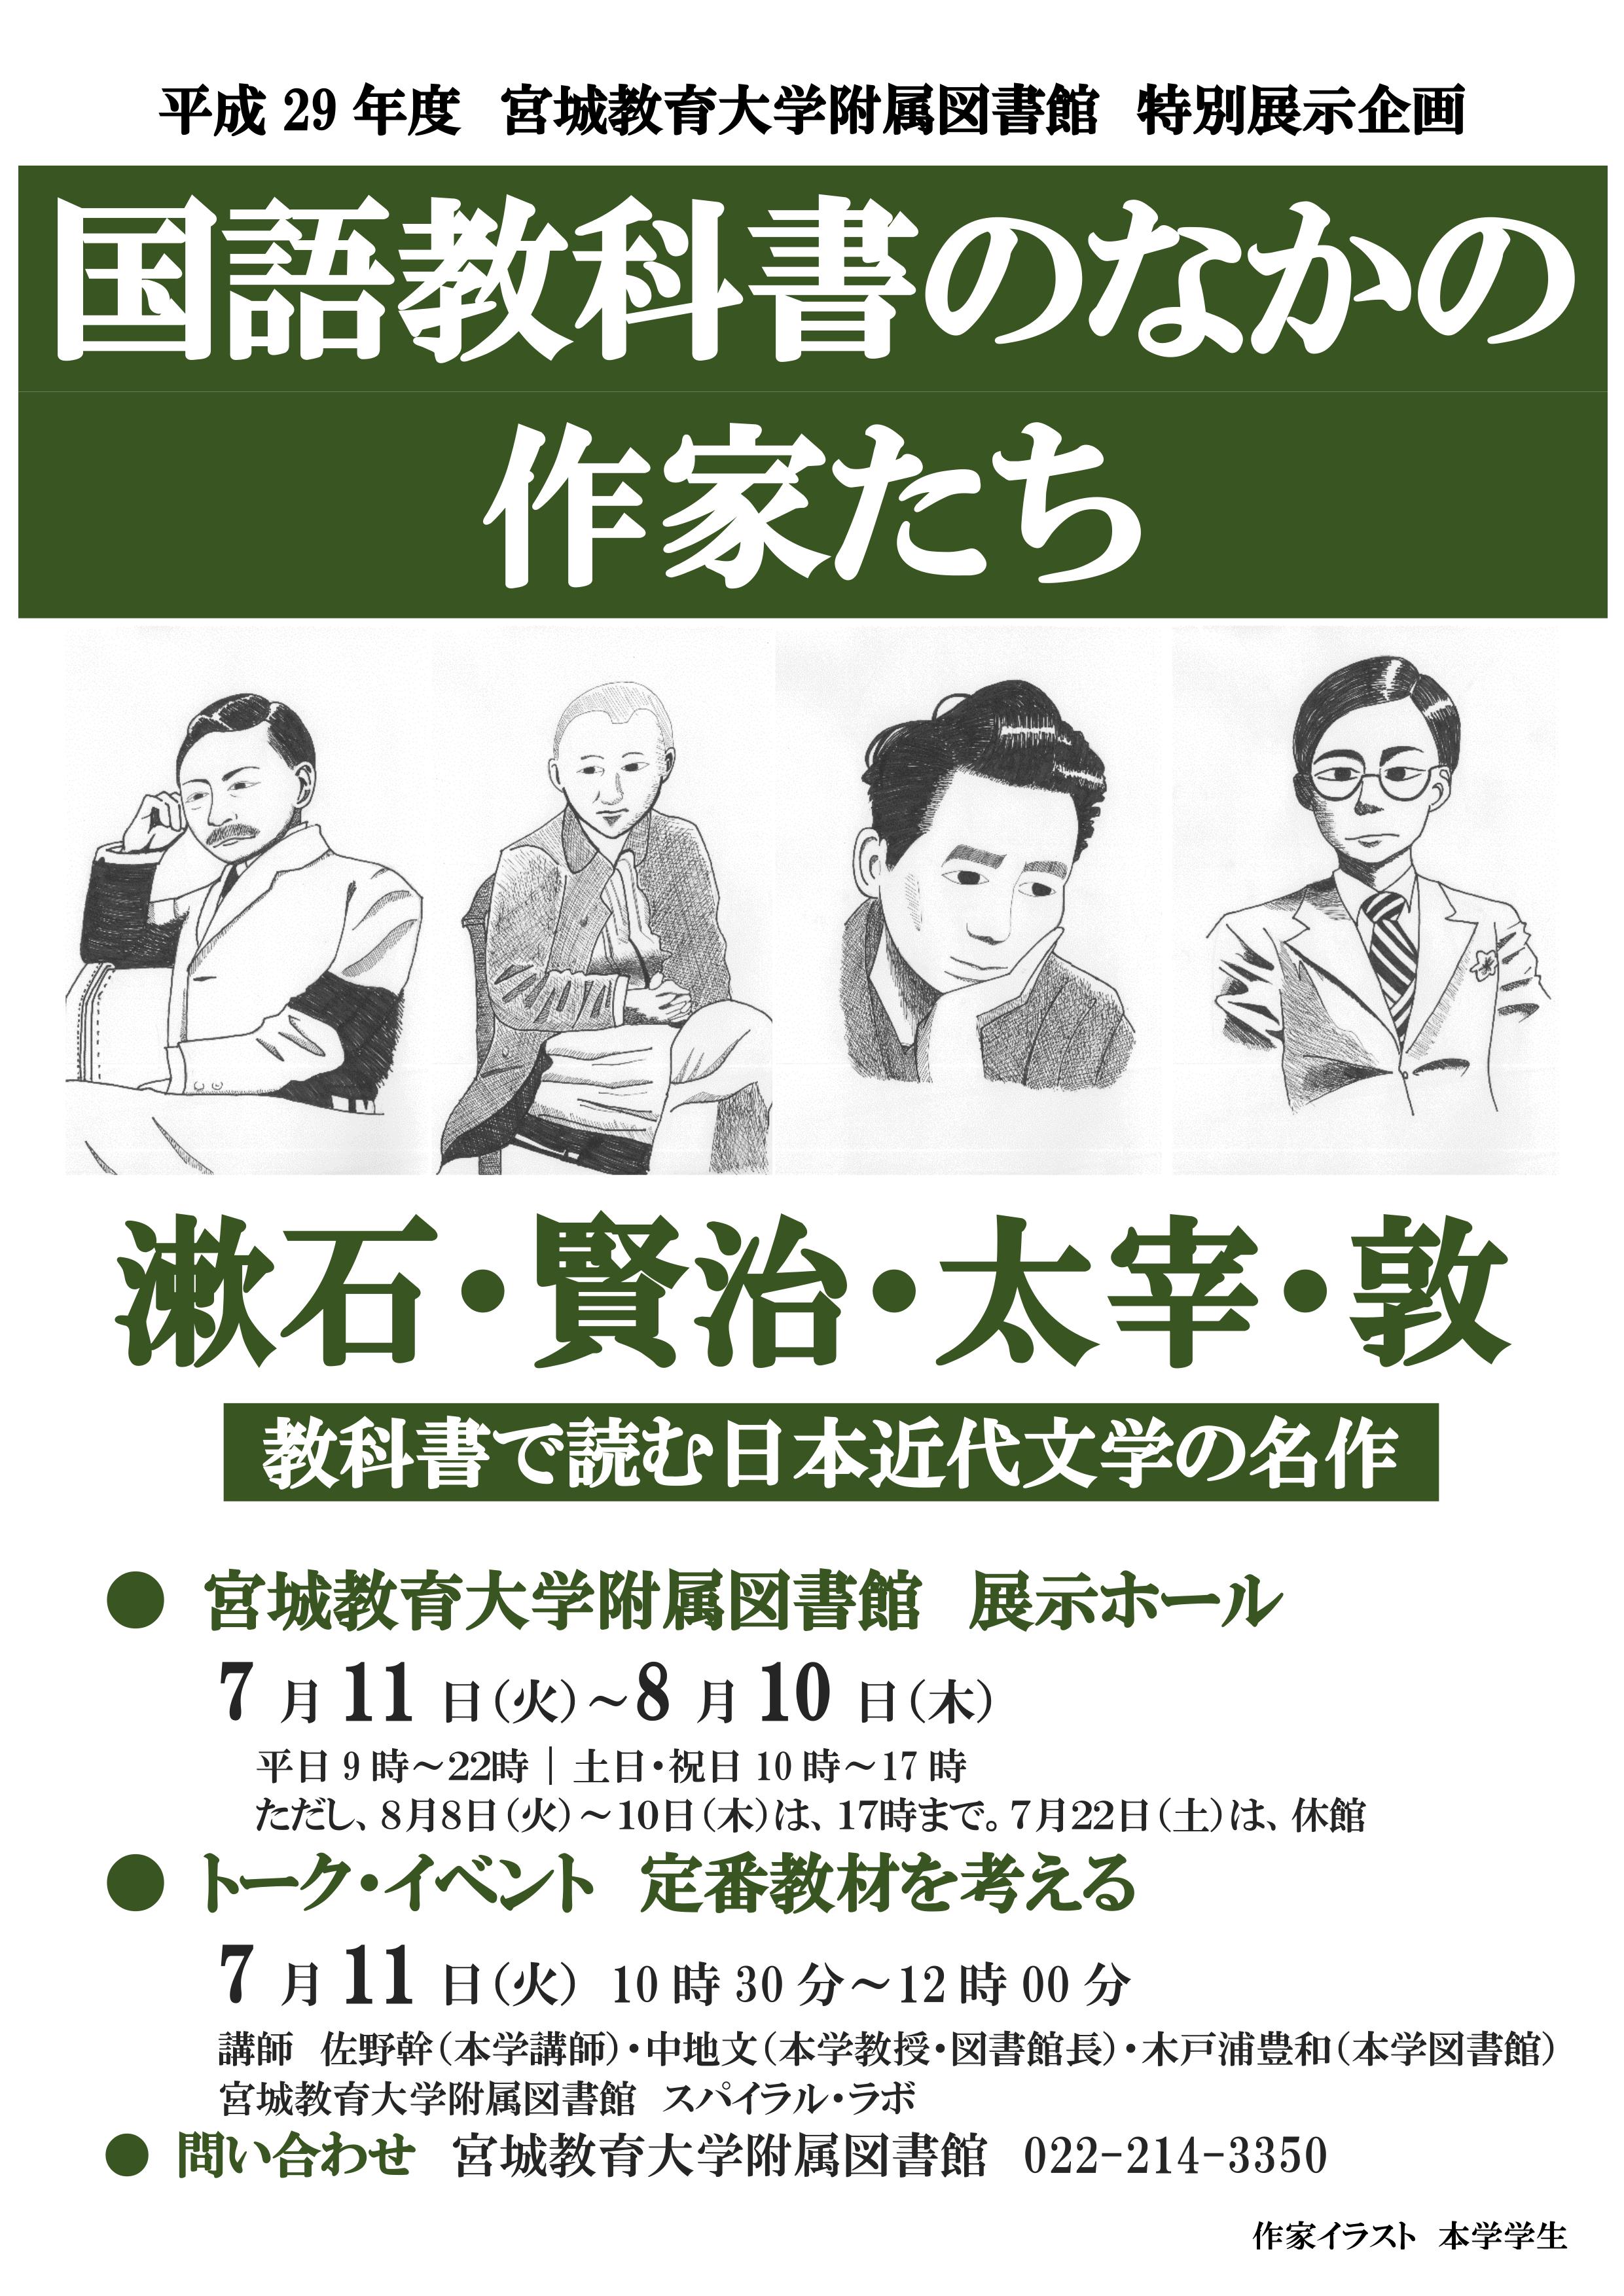 平成29年度教科書展ポスター